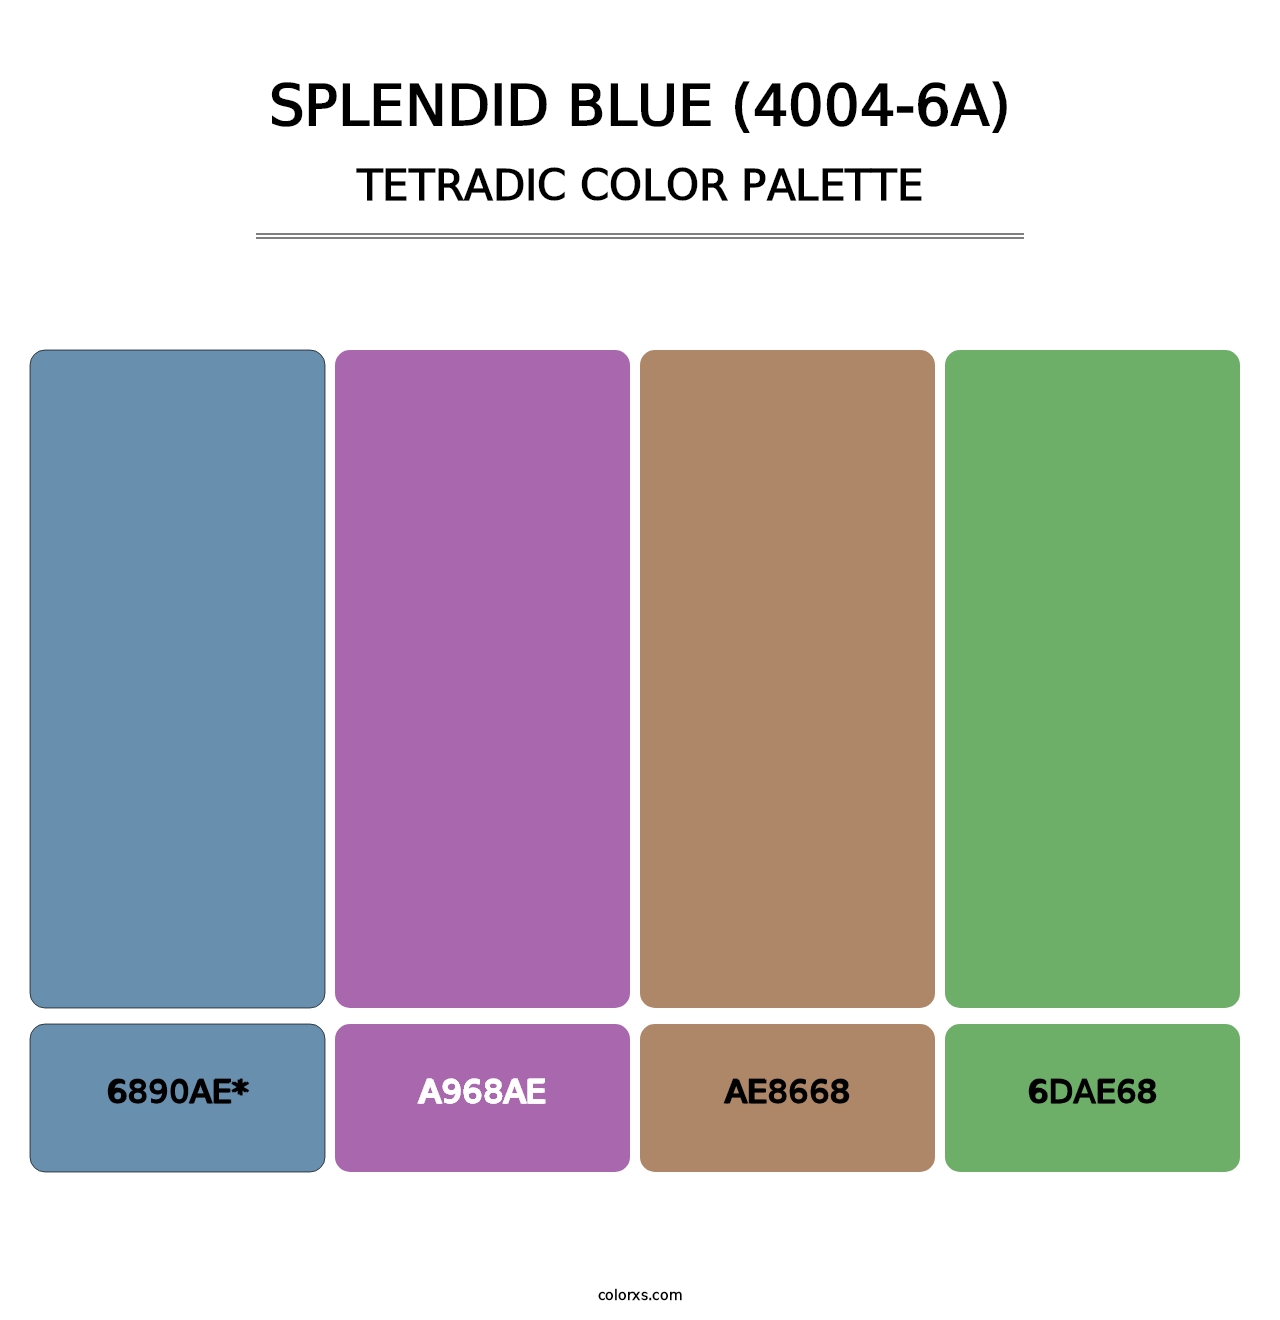 Splendid Blue (4004-6A) - Tetradic Color Palette